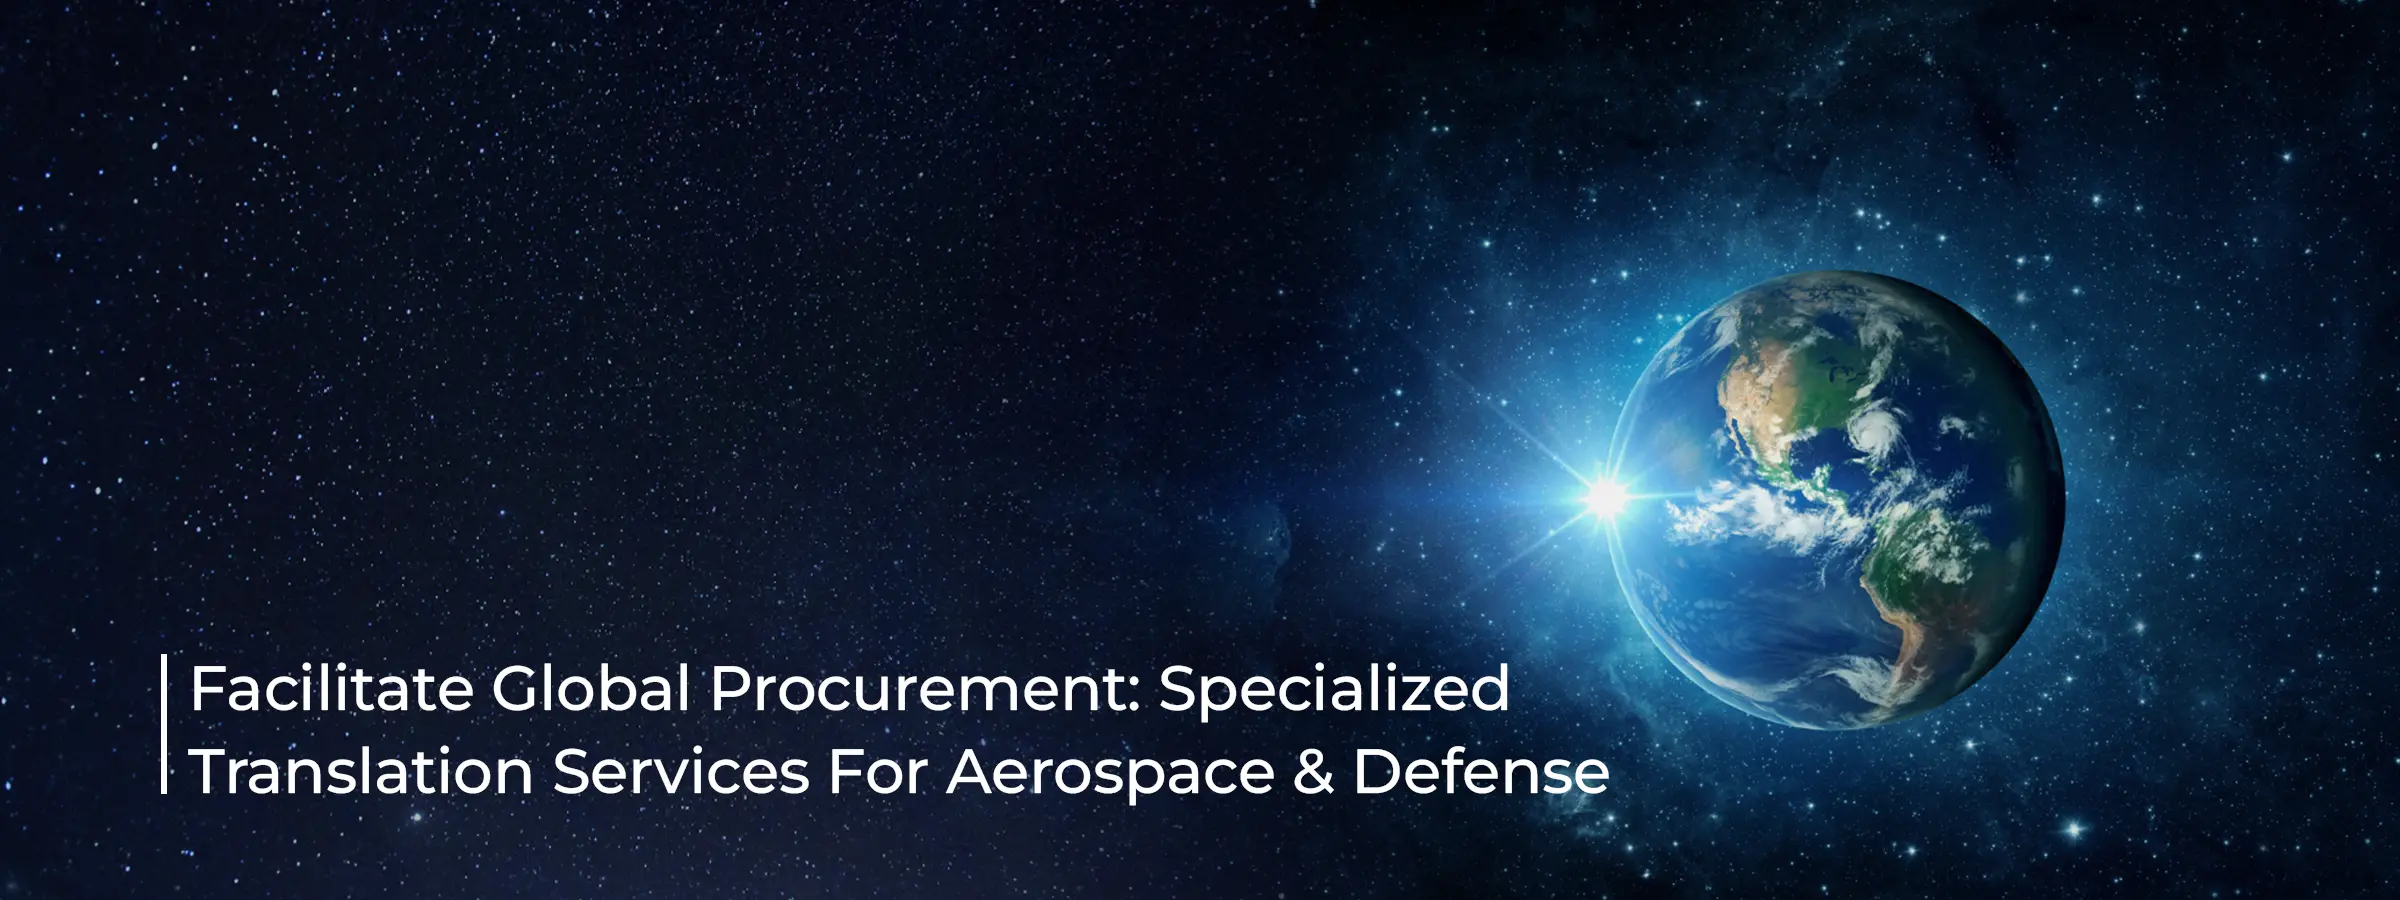 facilitate-global-procurement-specialized-translation-services-for-aerospace-defense